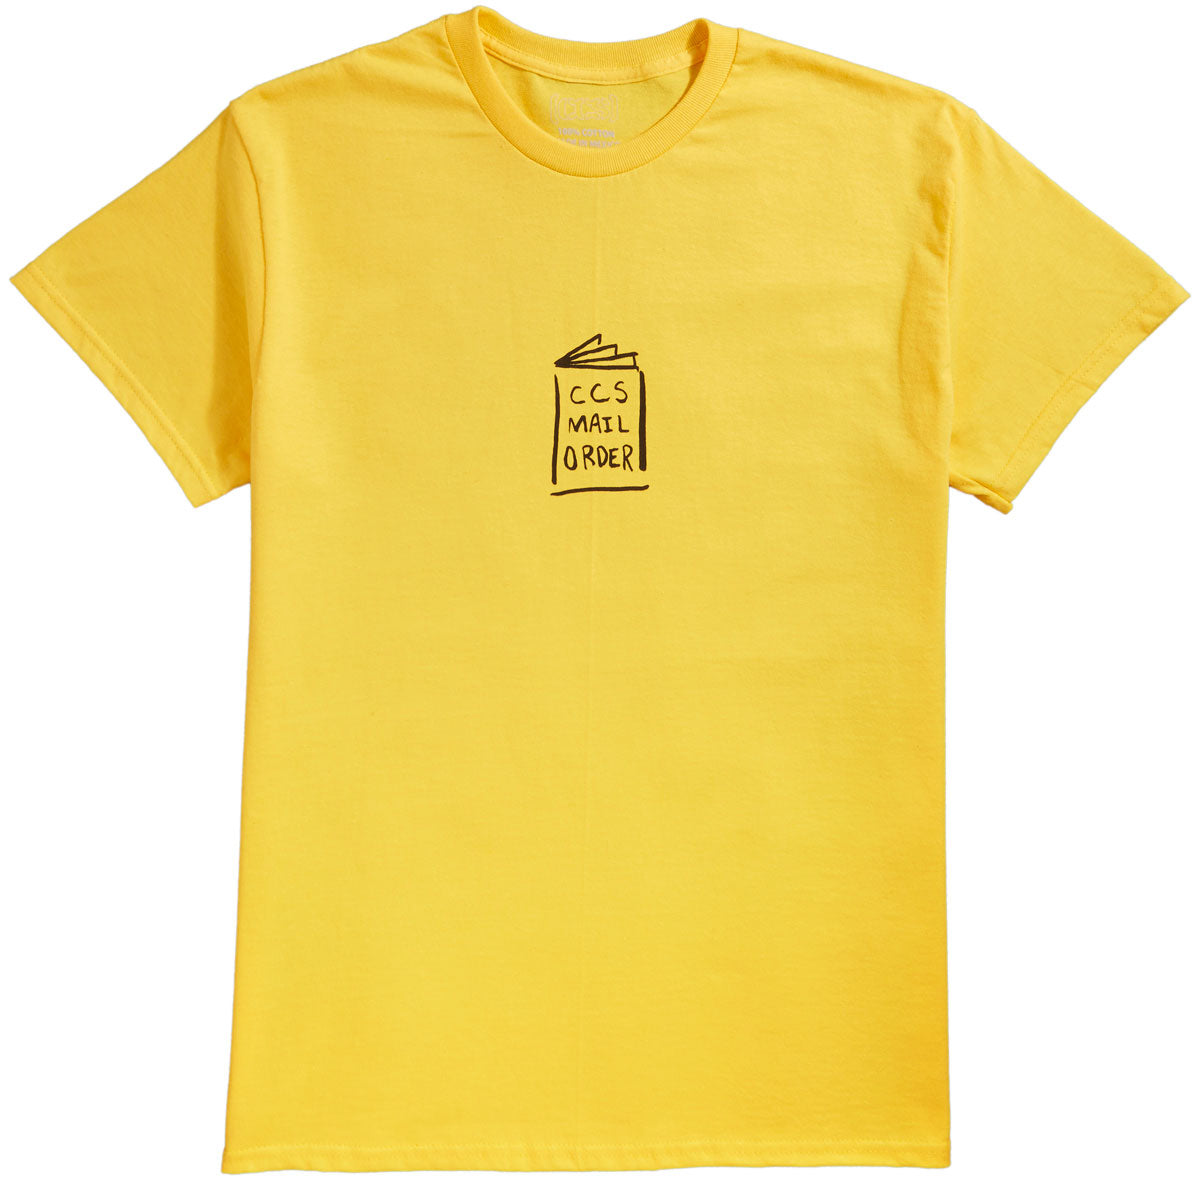 CCS Catalog Sketch T-Shirt - Yellow/Black image 1